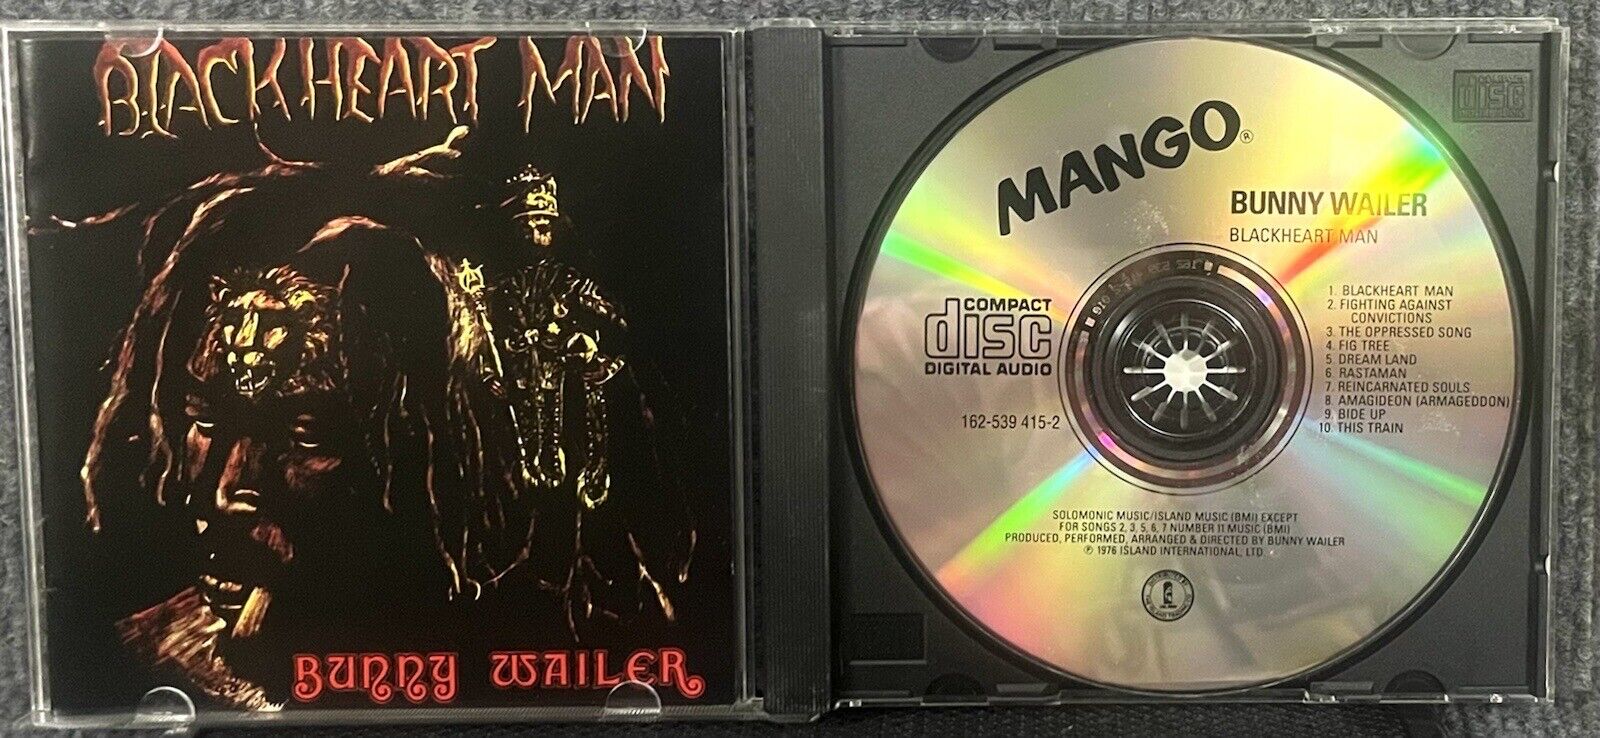 Blackheart Man by Bunny Wailer (CD, Oct-1990, Mango) Reggae 162-539 415-2